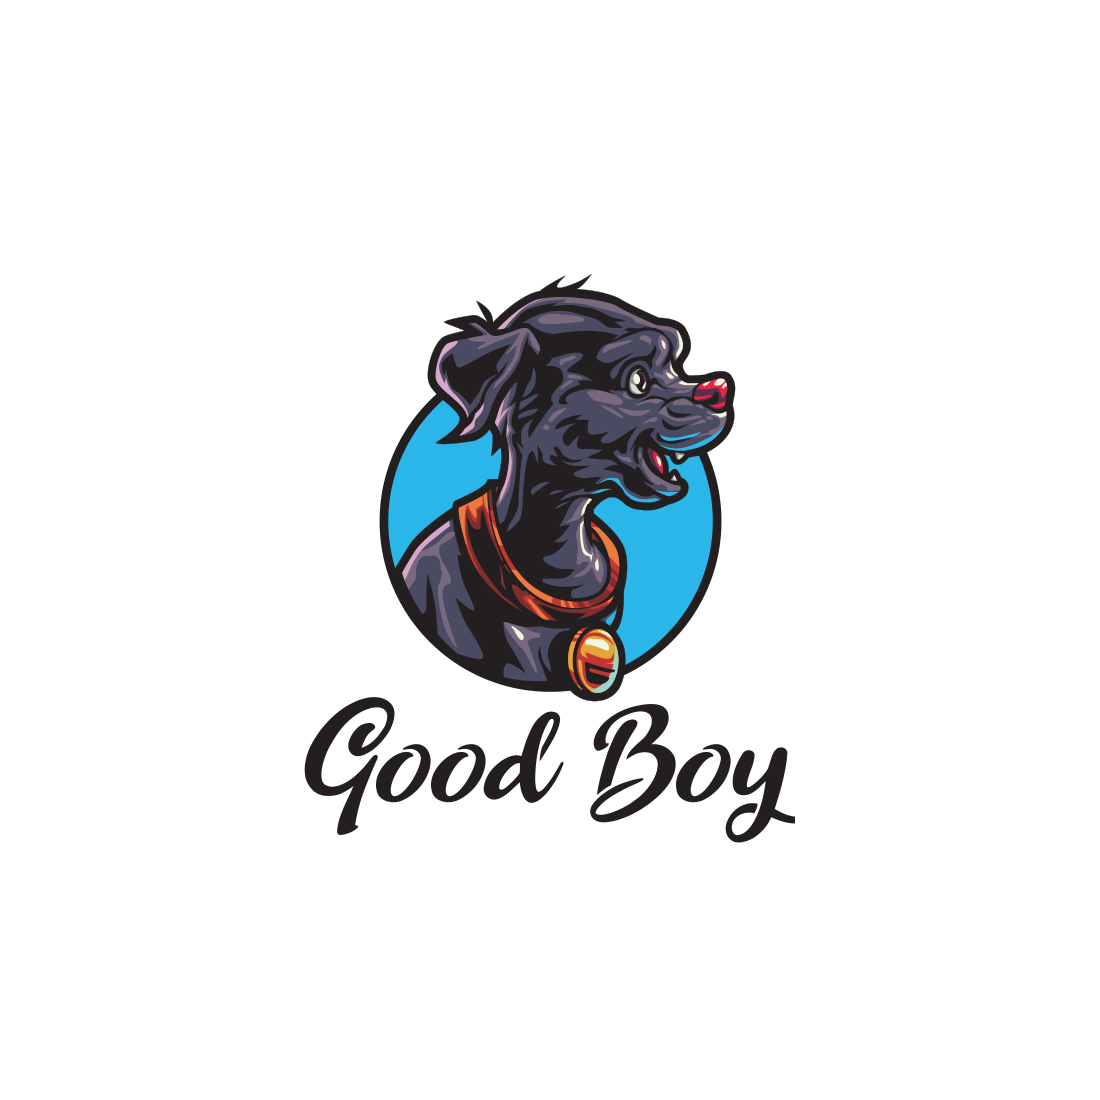 Good Dog - Pet Shop Logo Design cover image.